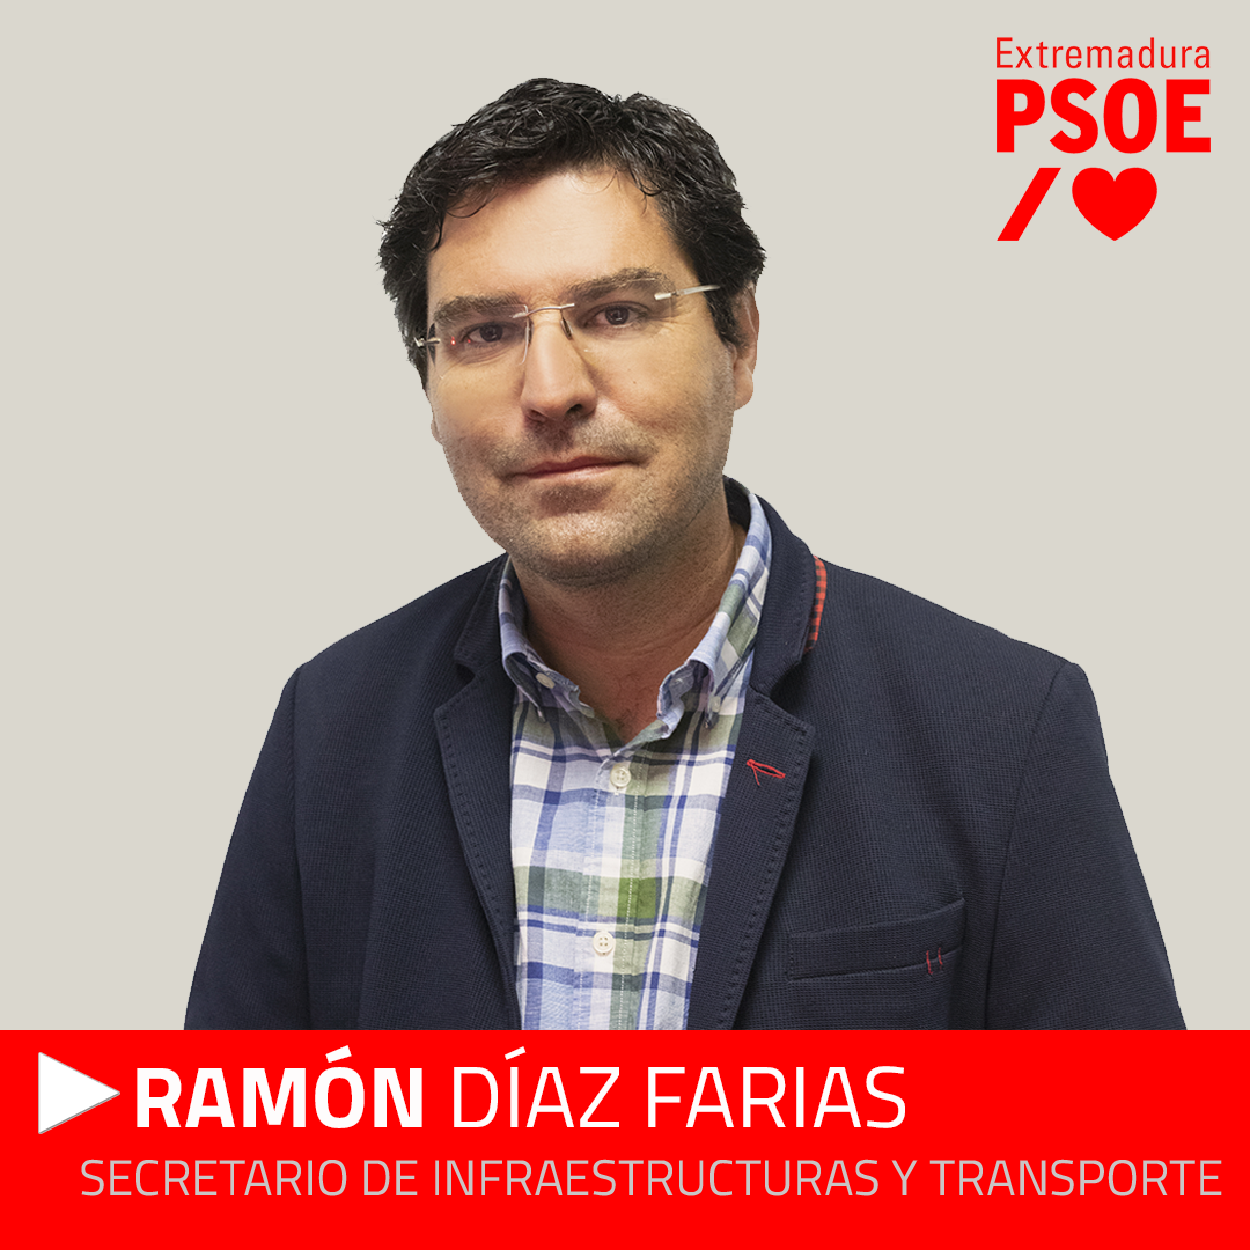 Ramon Diaz Farias 4 Mesa de trabajo 1